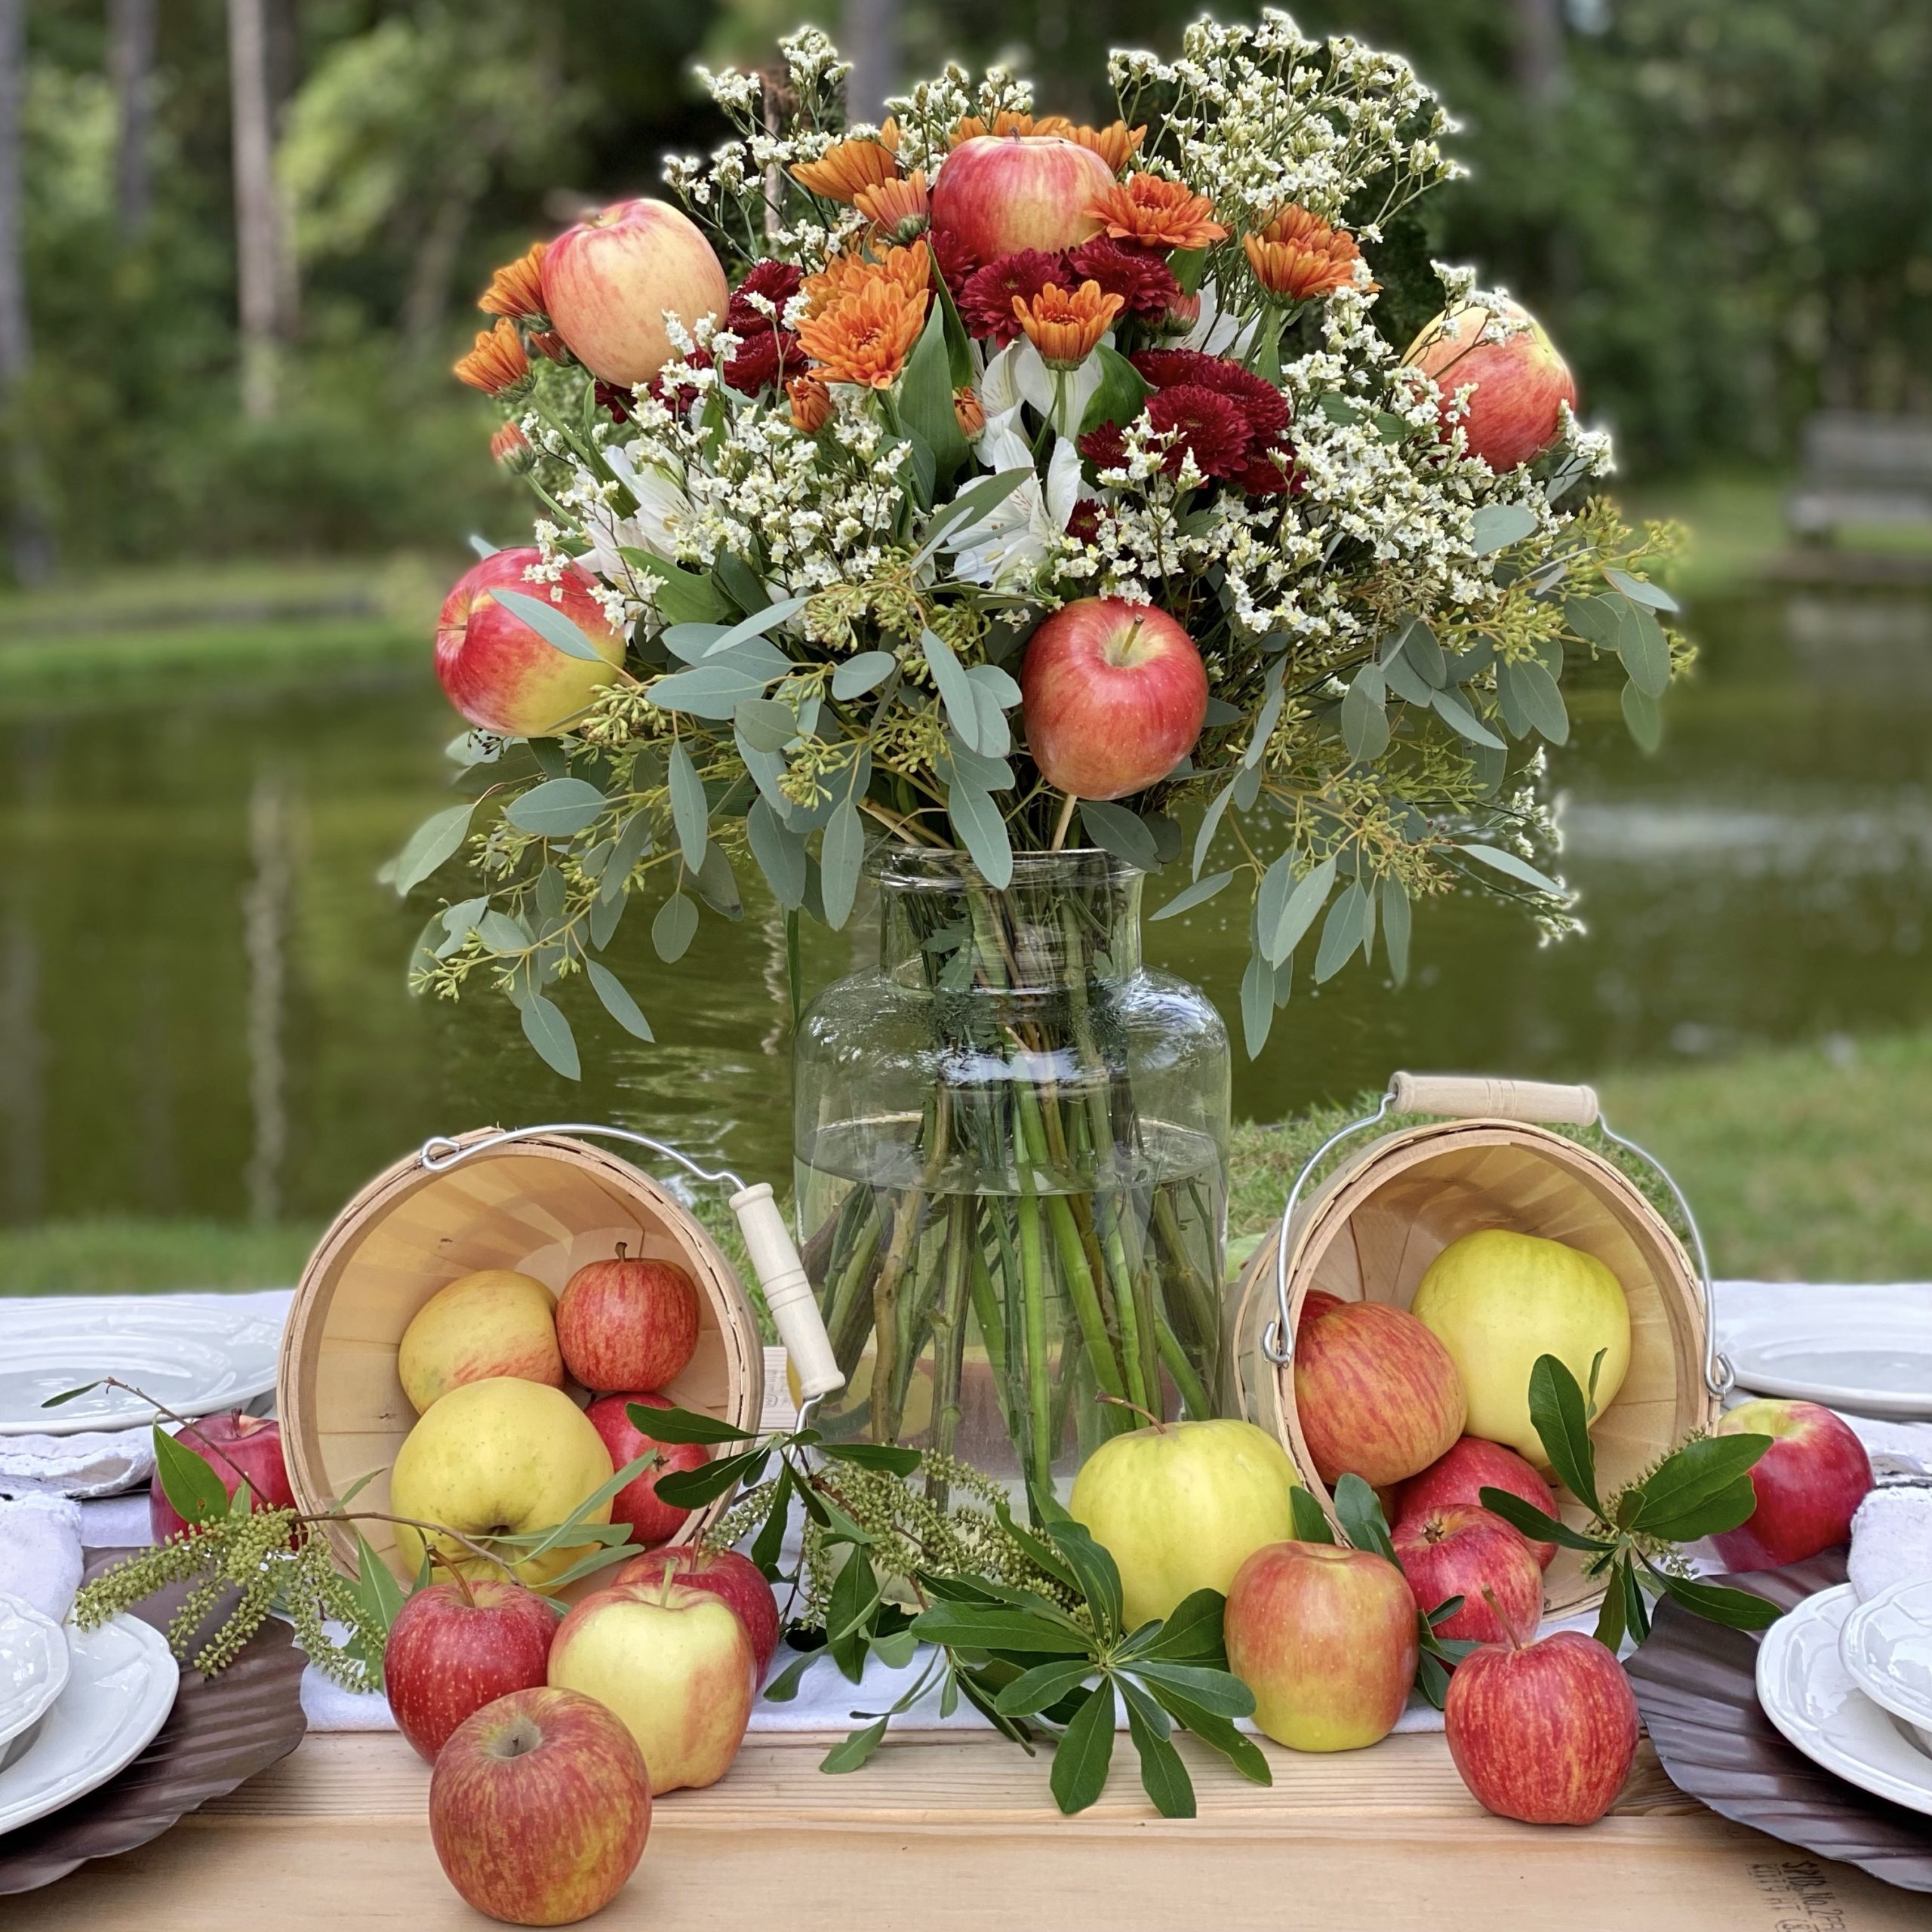 Apple floral arrangement surrounded by bushel baskets filled with apples.